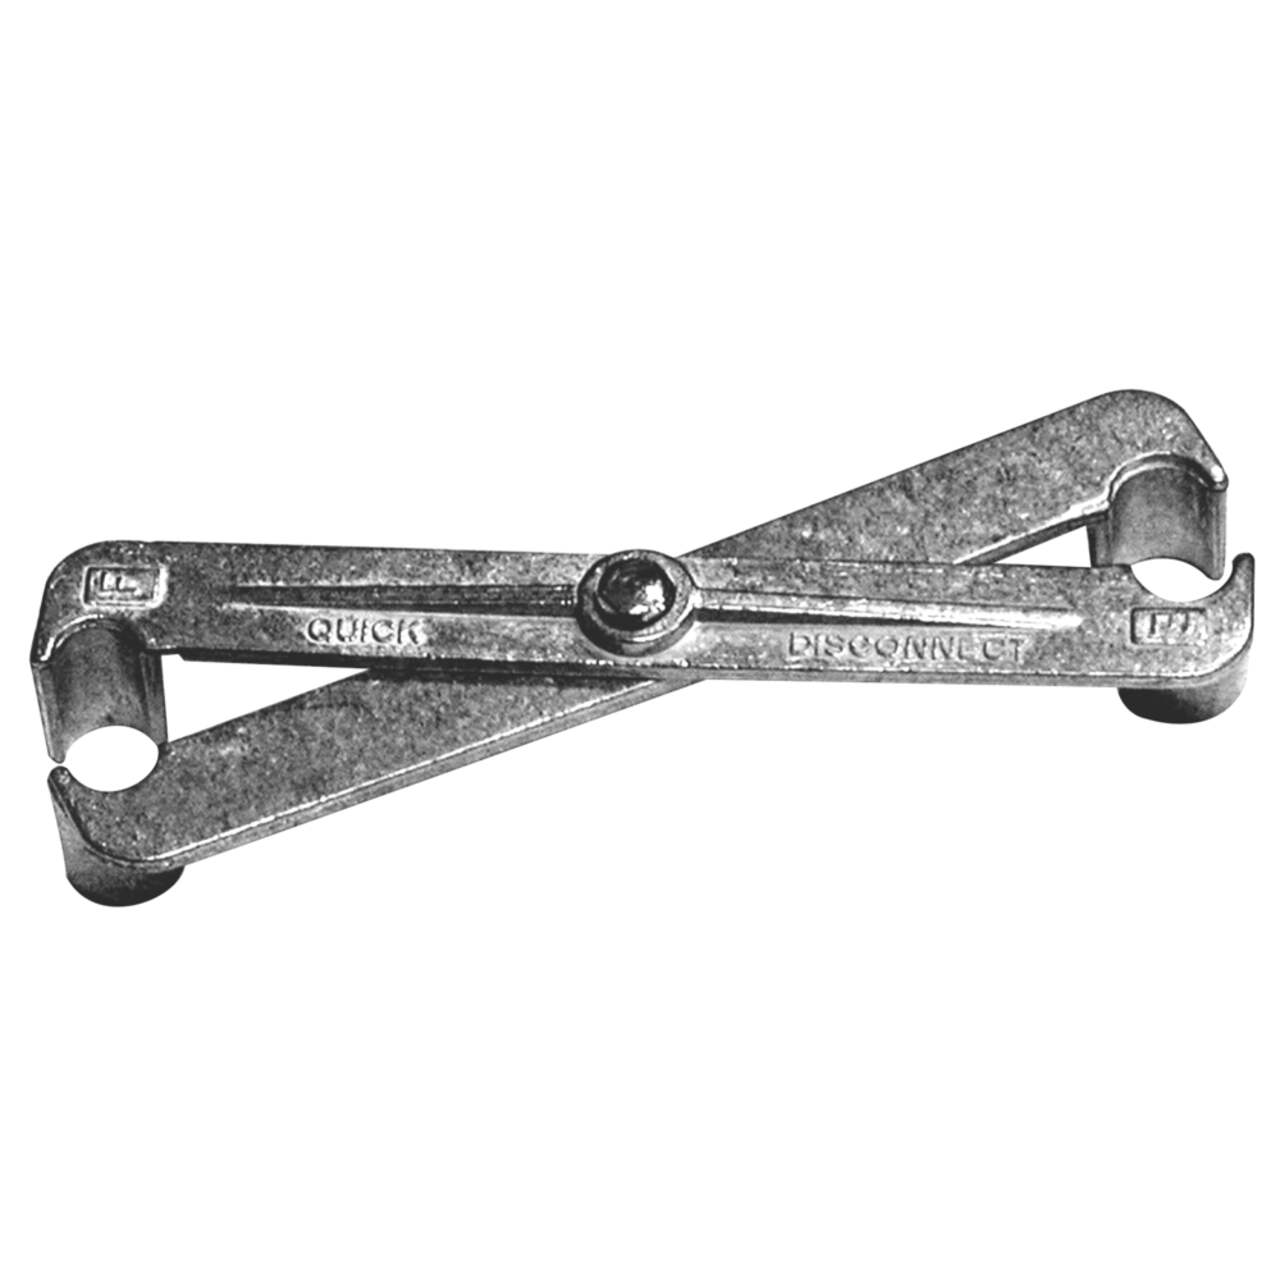 Terminal pin removal tool set FR-150